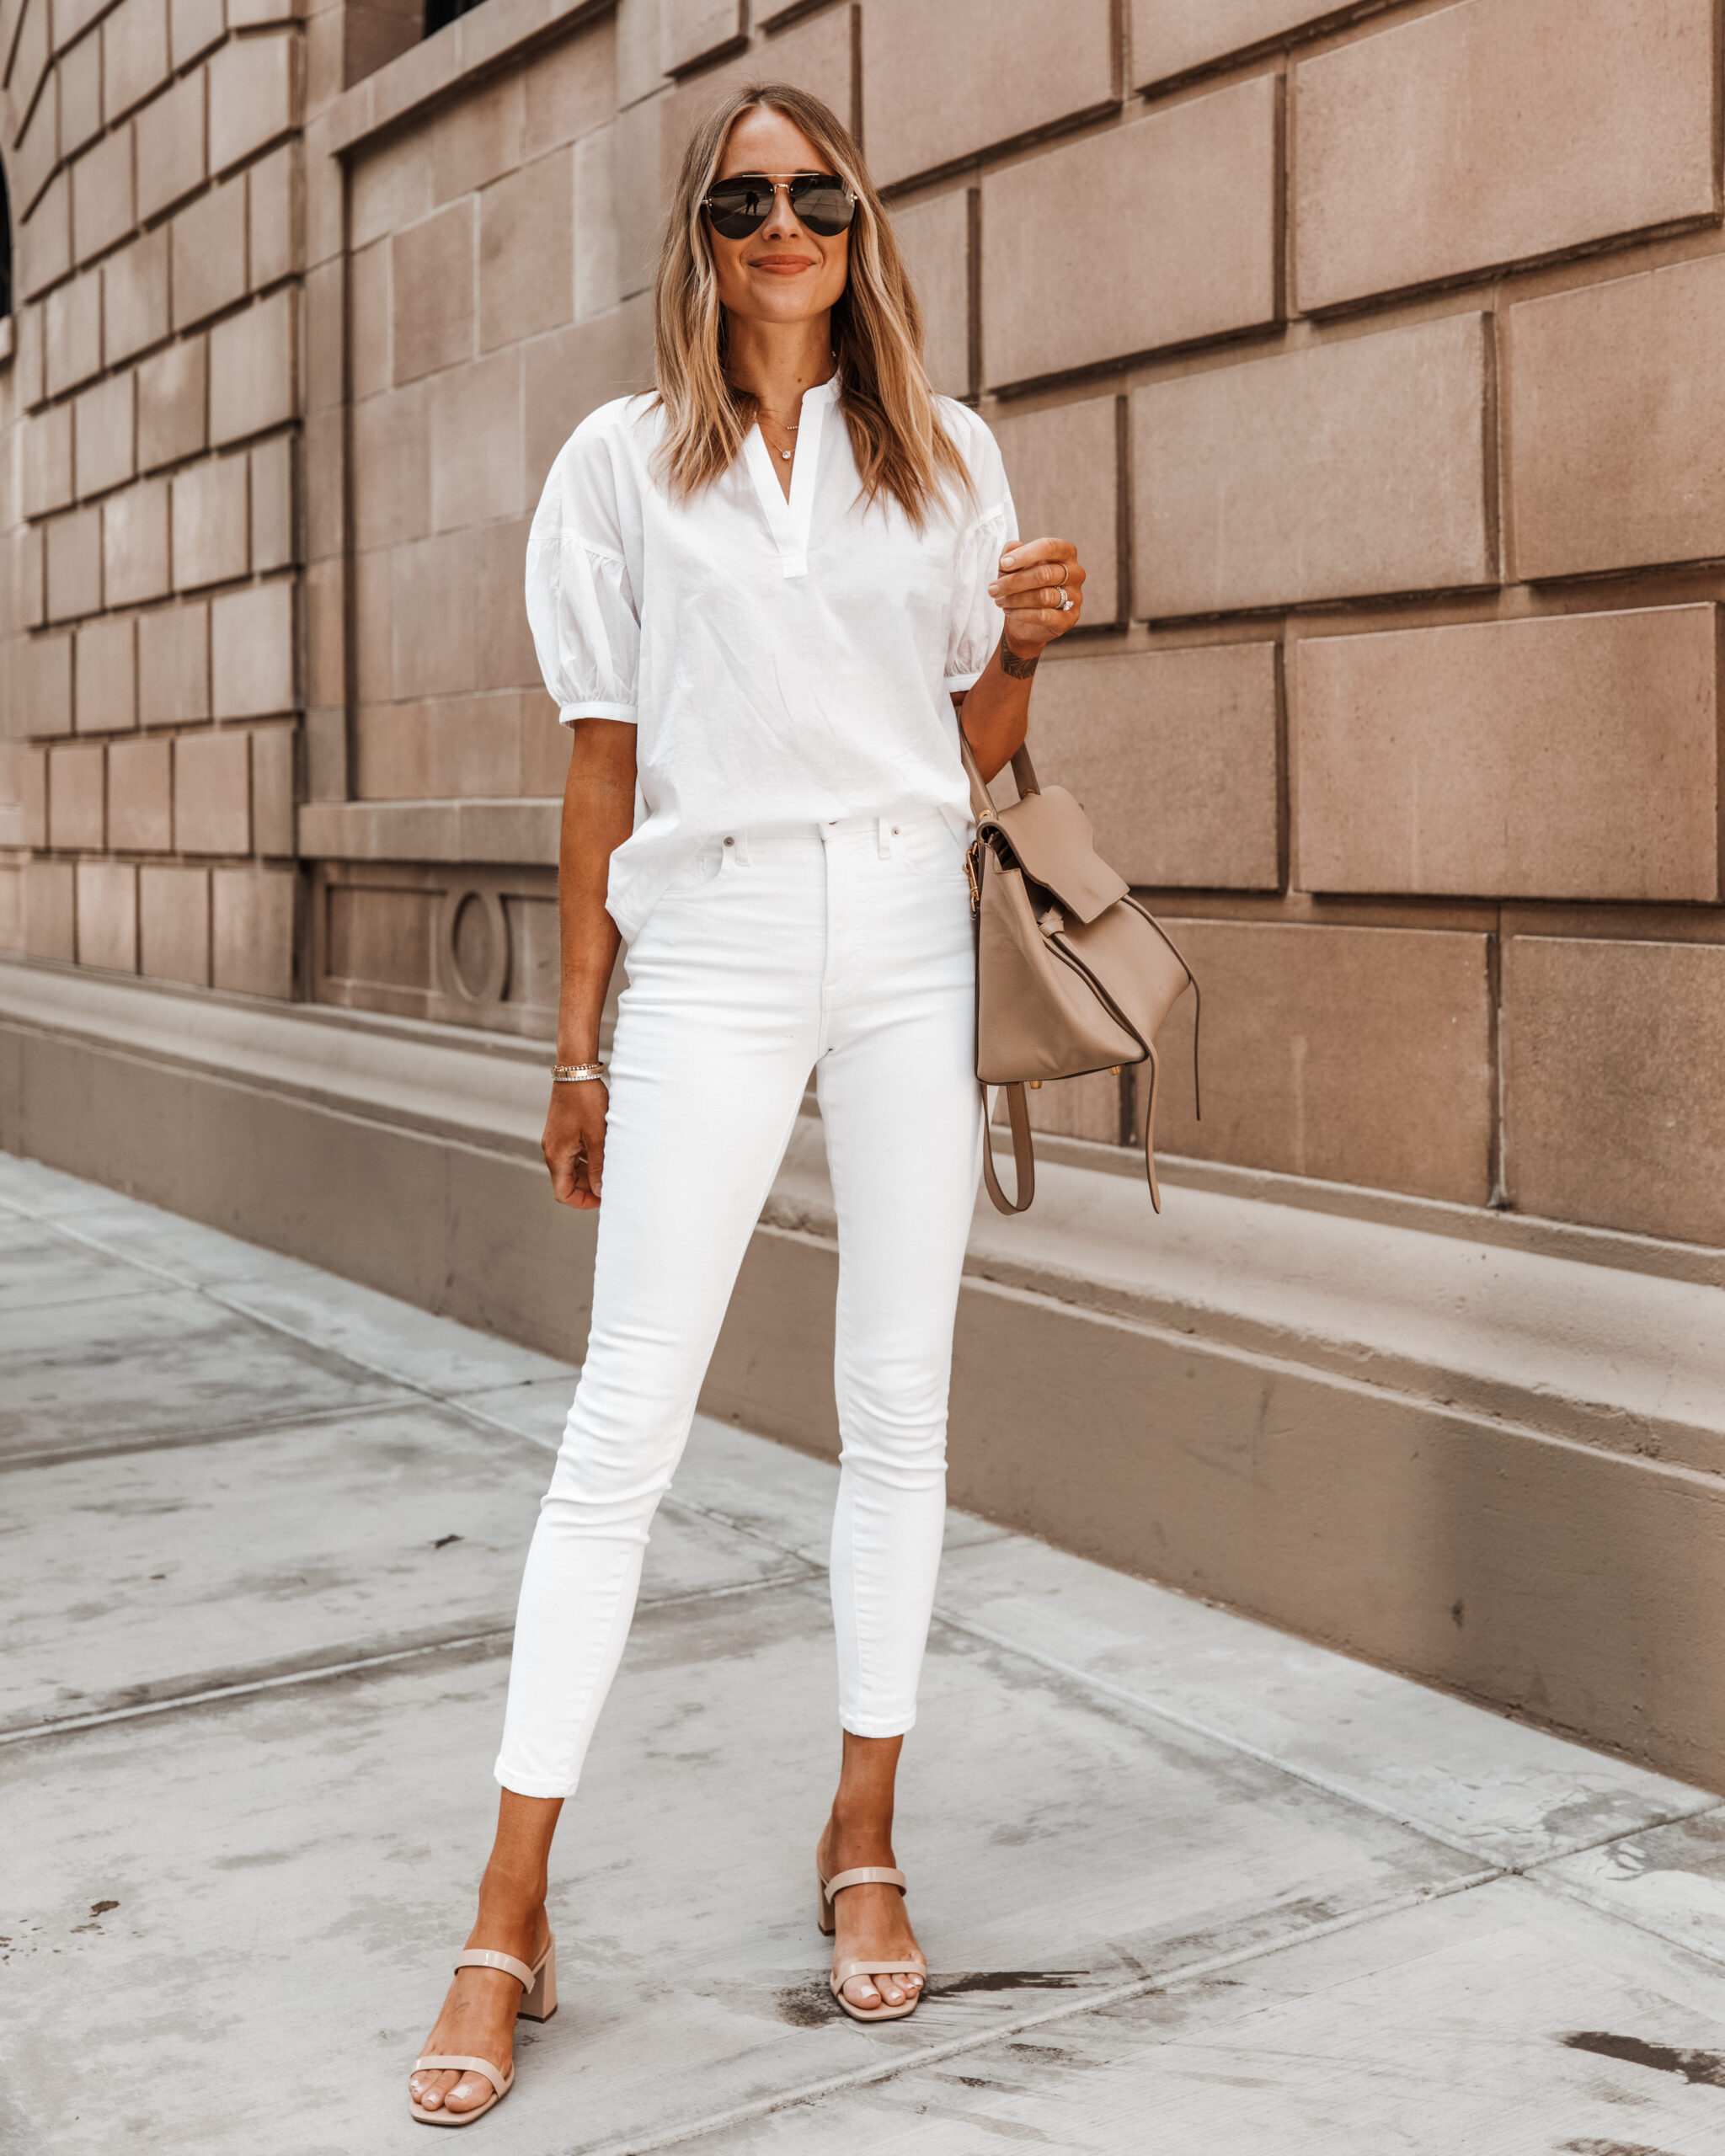 Fashion Jackson wearing white puff sleeve shirt white skinny jeans tan sandals